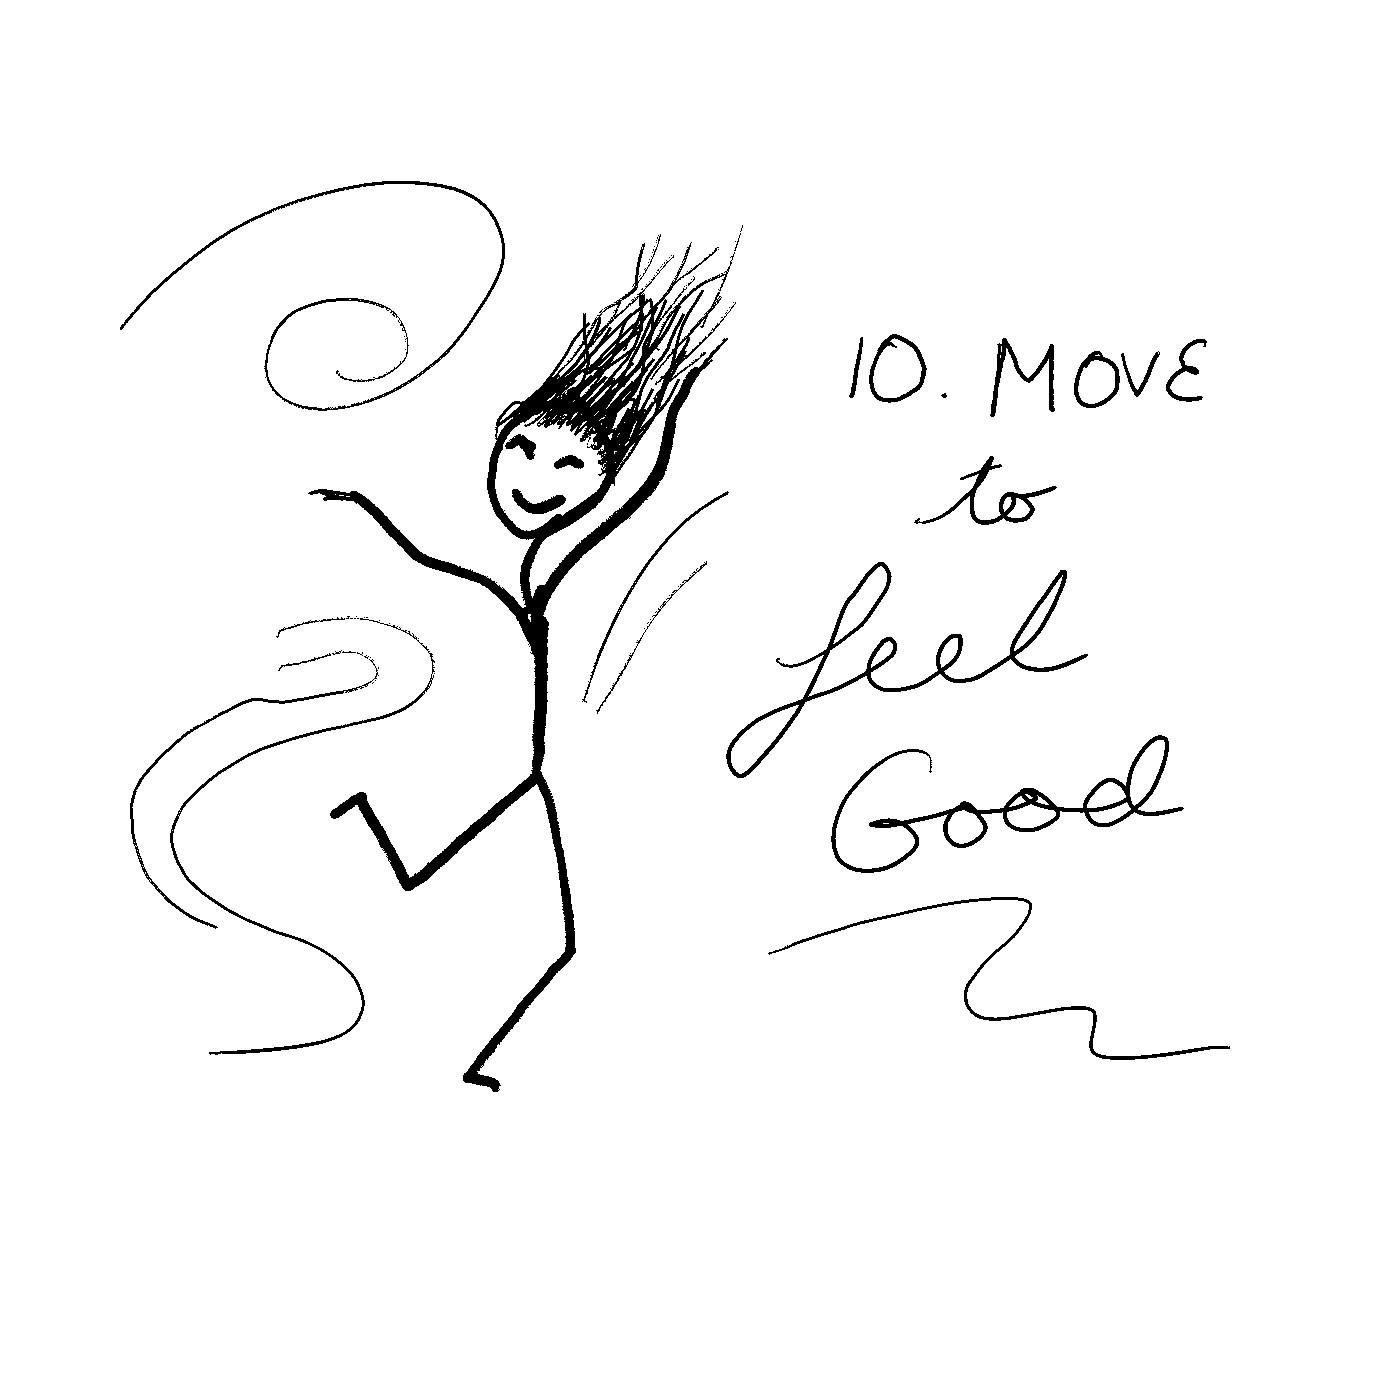 Yoga Class Rule 10: Move to feel Good